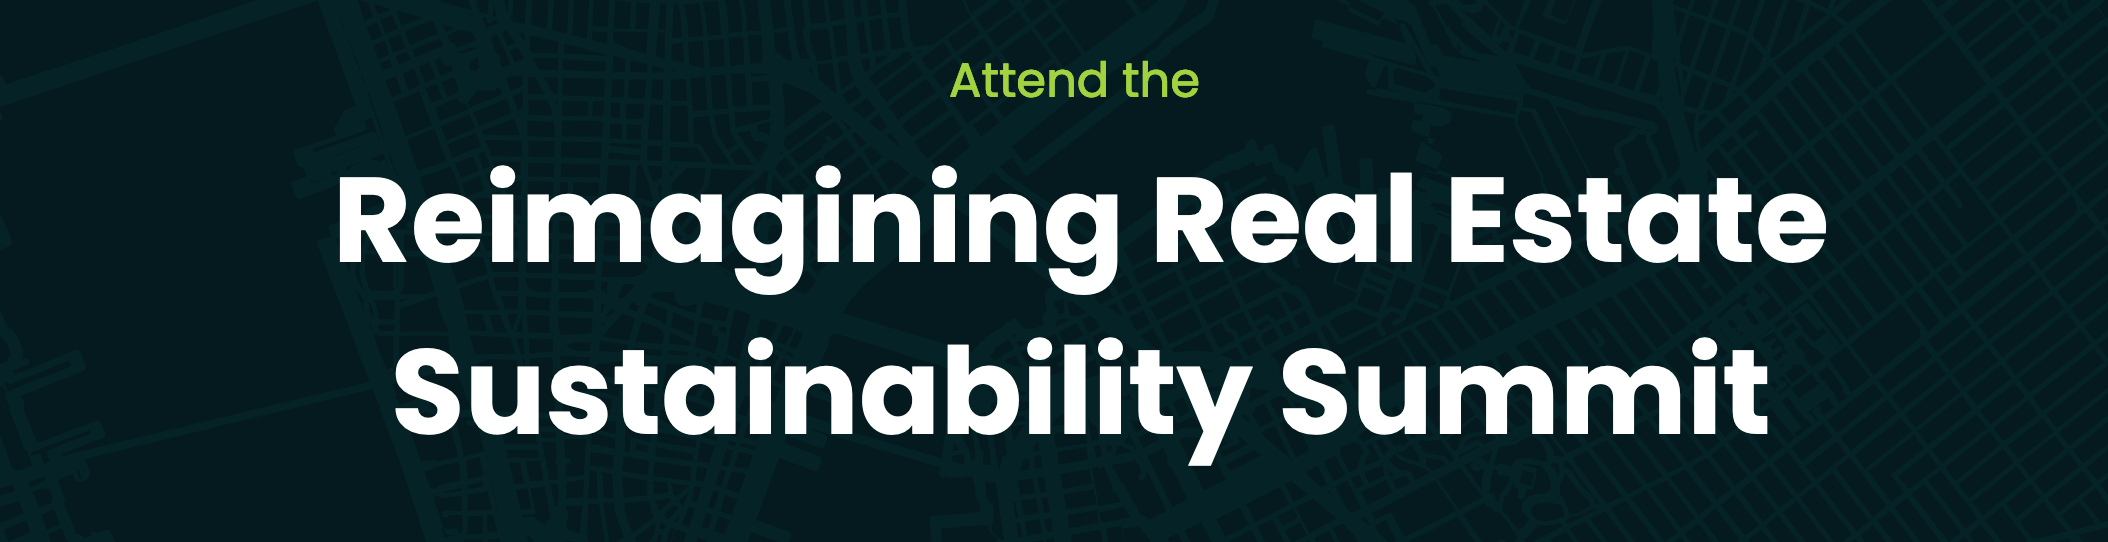 reimagining real estate sustainability summit